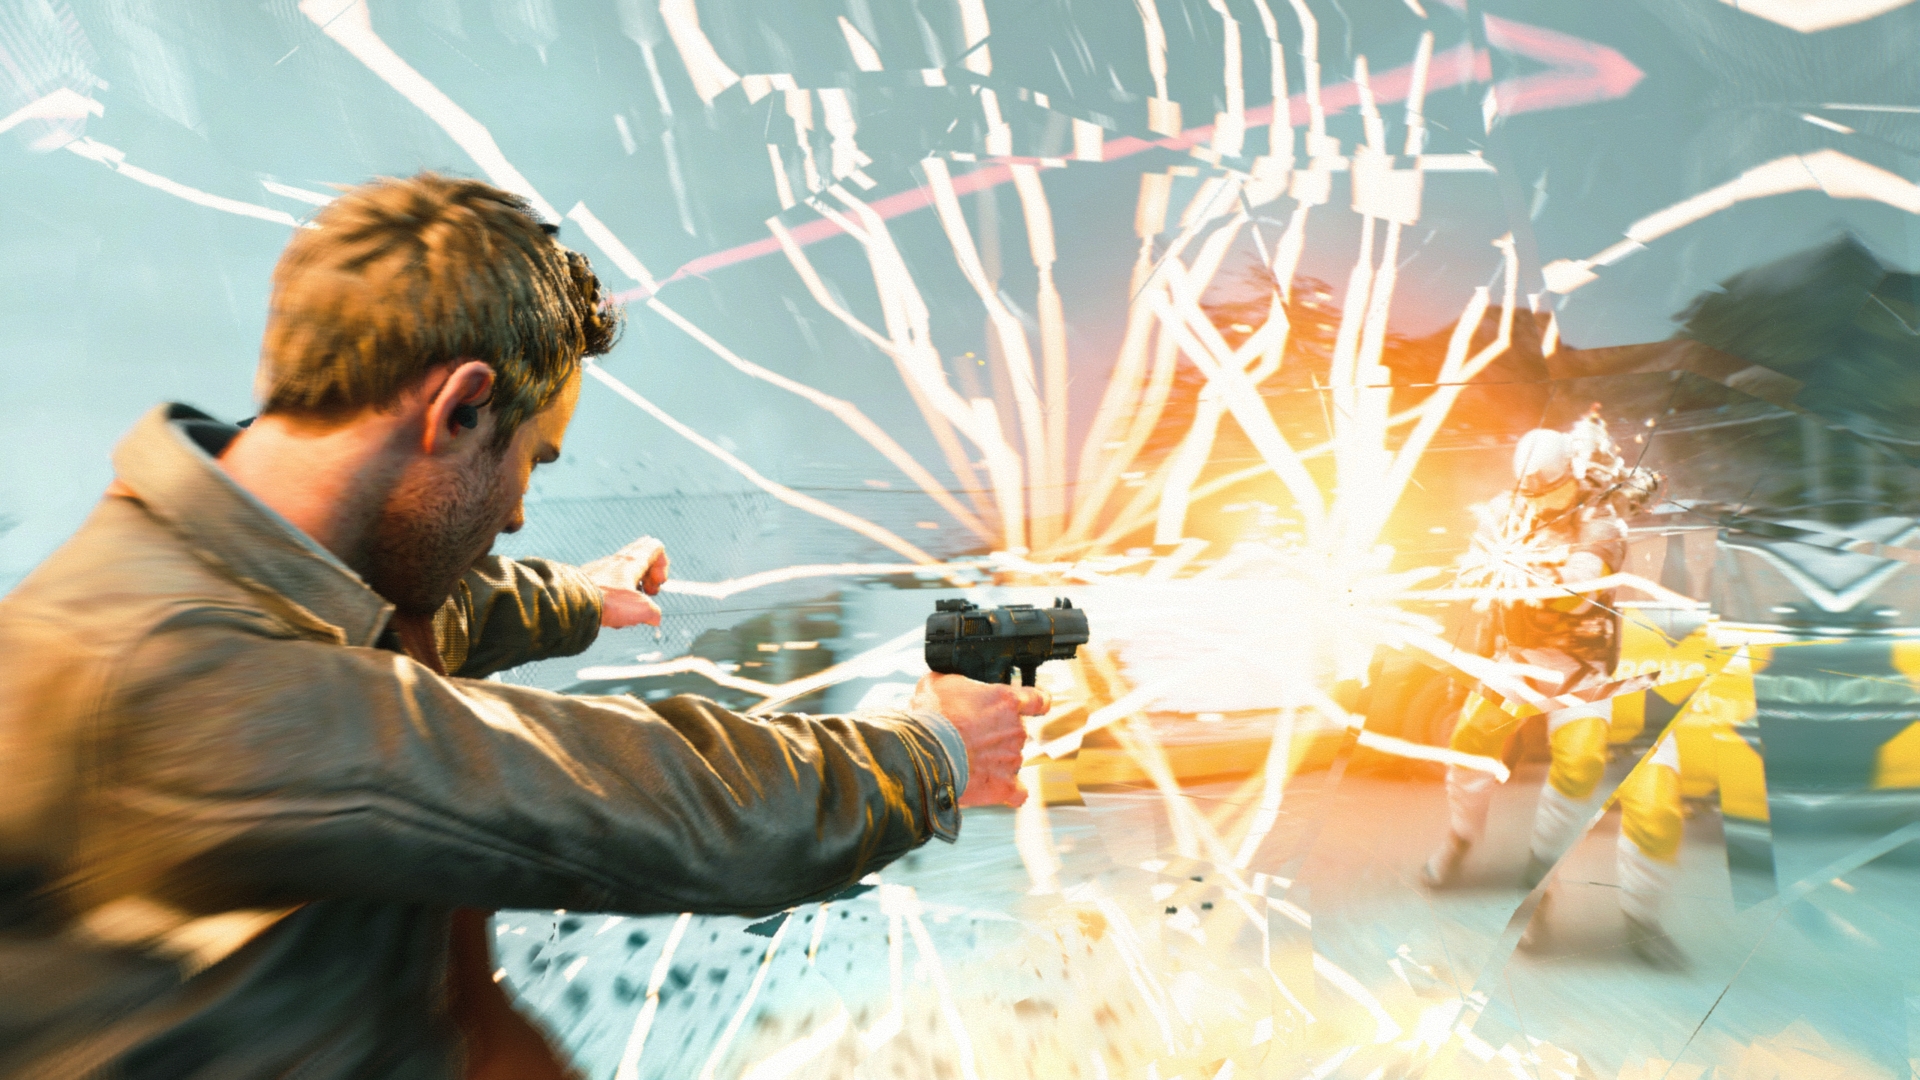 Alan Wake 2 adds Quantum Break's Shawn Ashmore